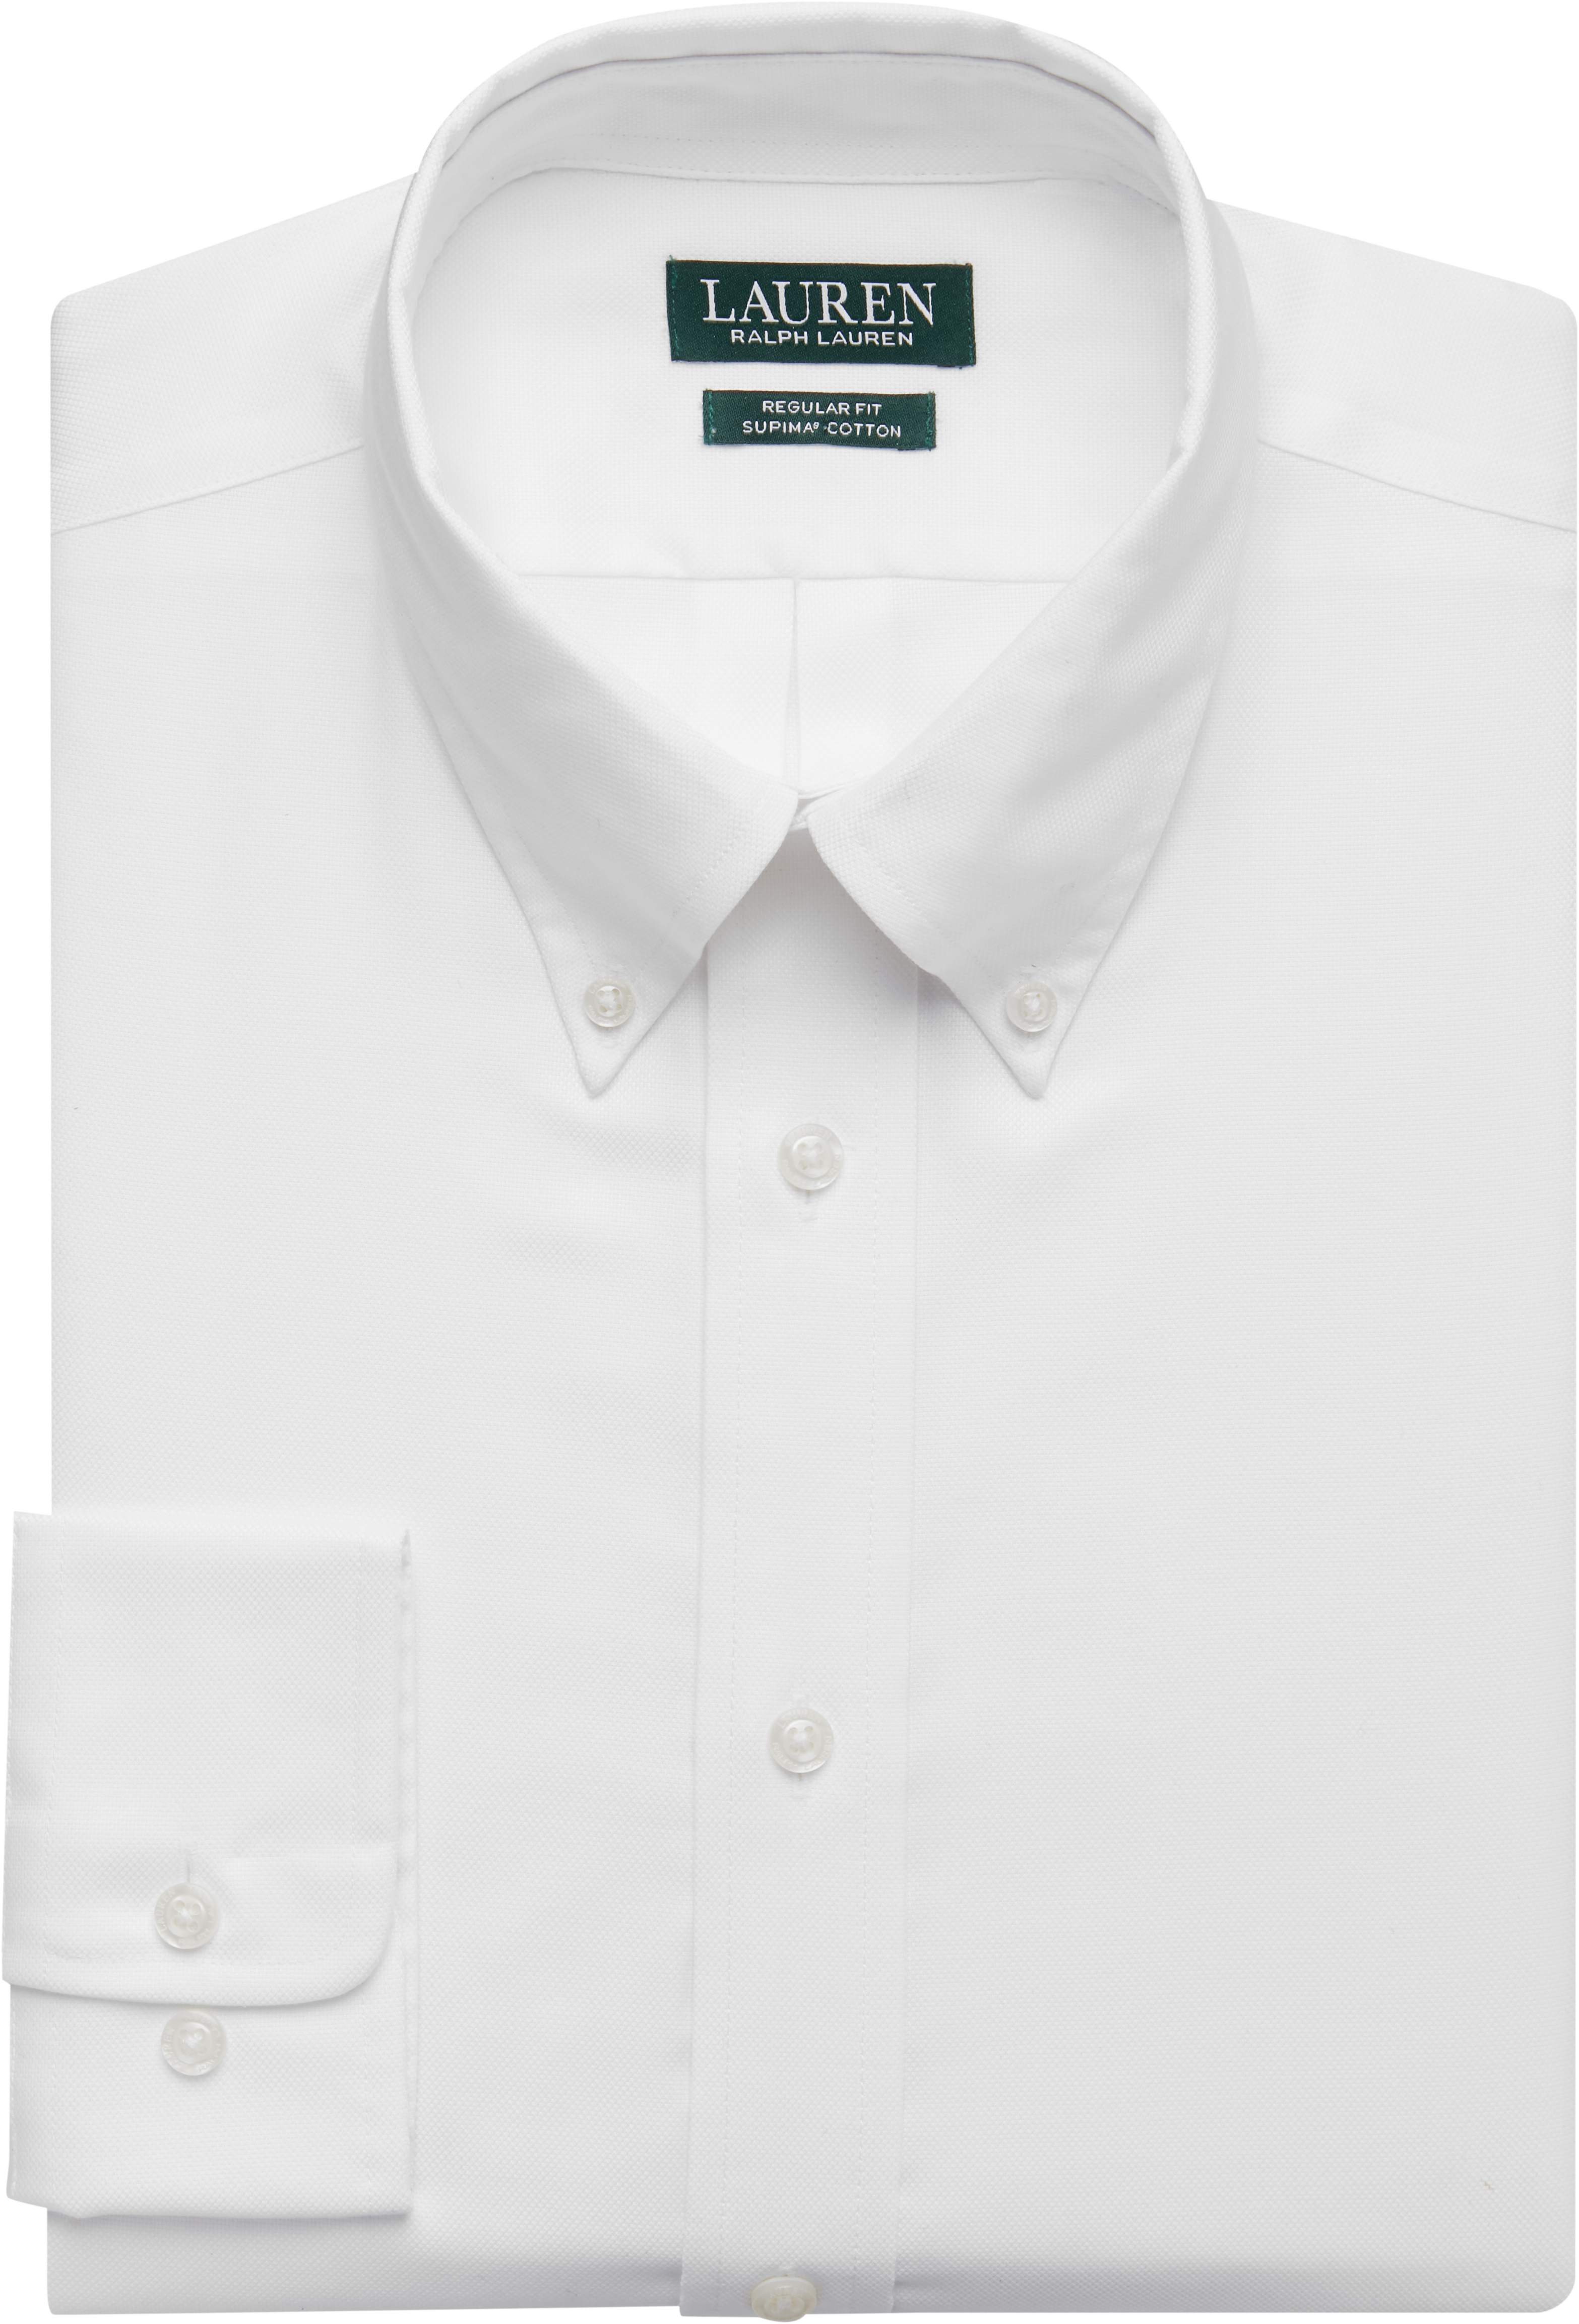 ralph lauren white fitted shirt